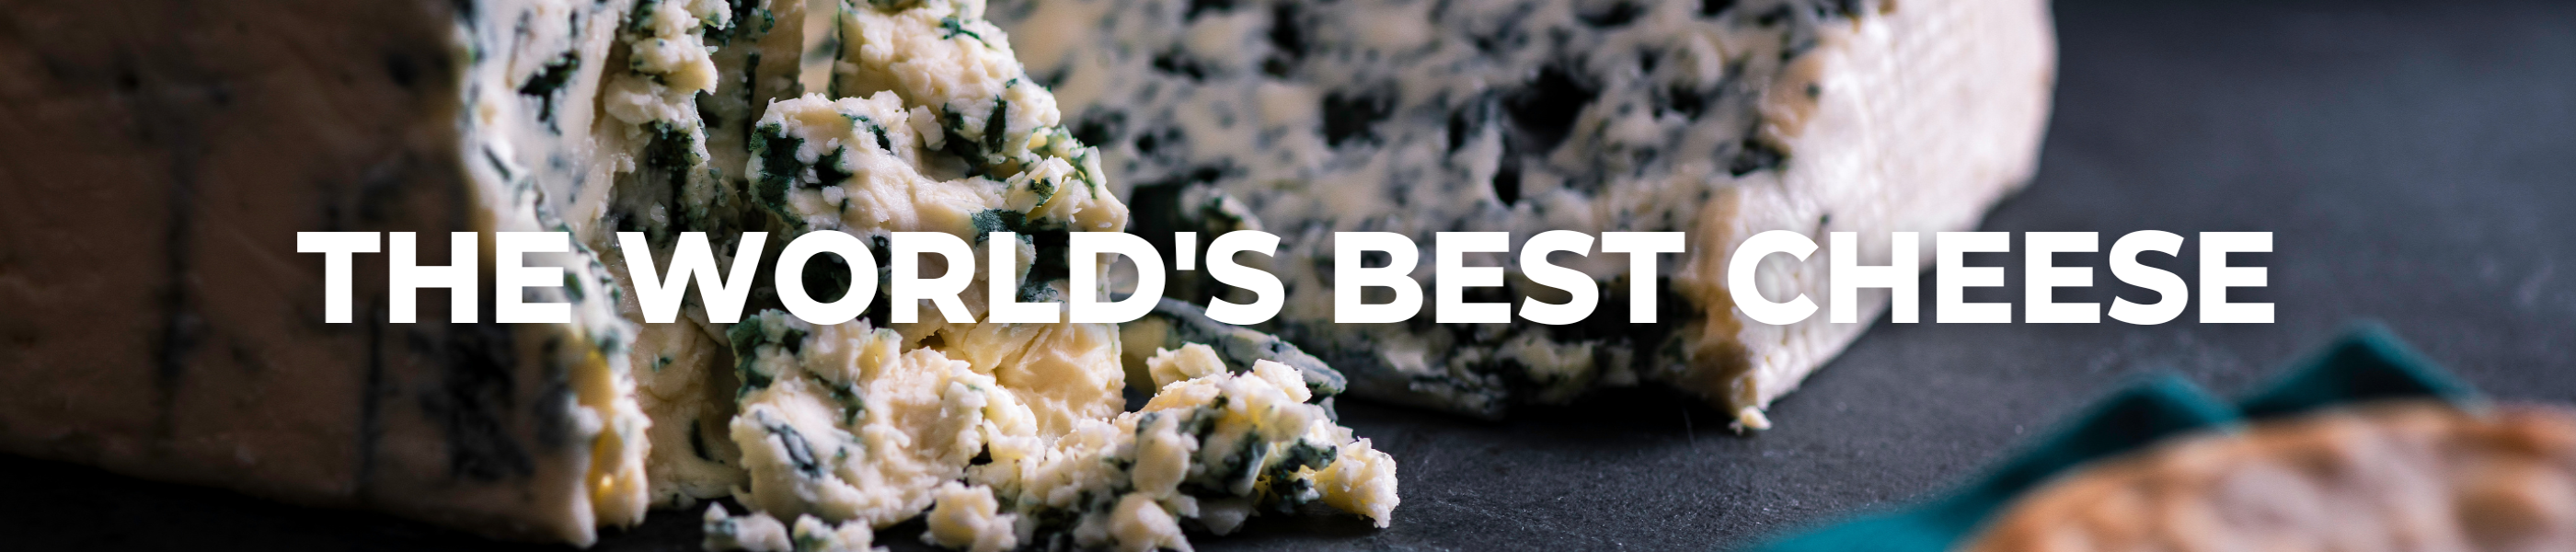 Blog header, the world's best cheese